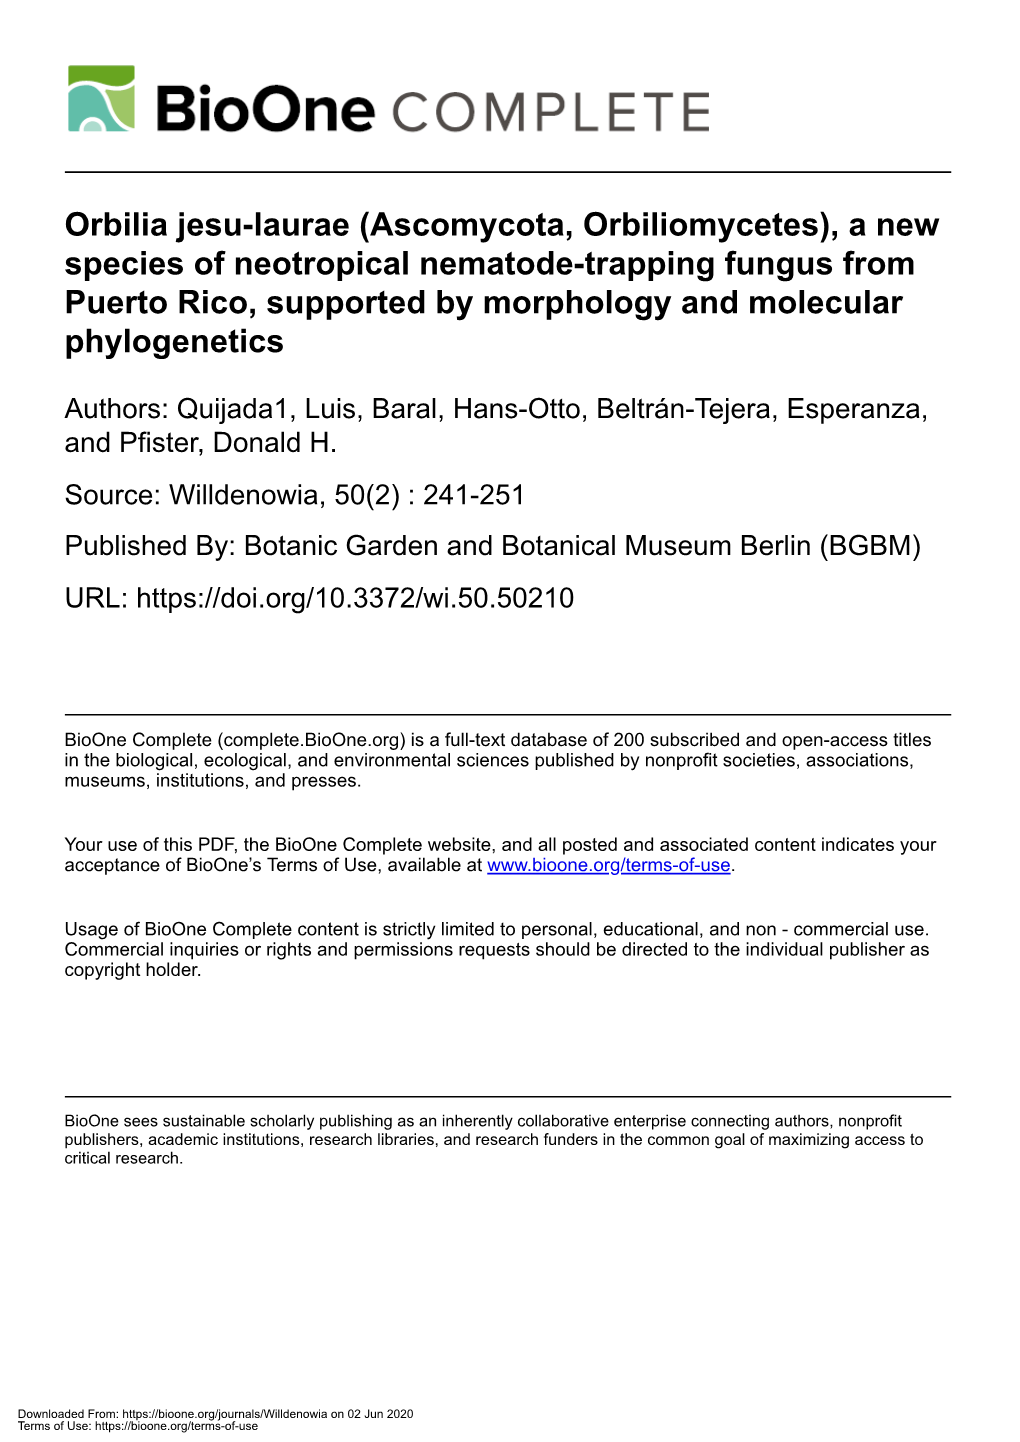 Orbilia Jesu-Laurae (Ascomycota, Orbiliomycetes), a New Species of Neotropical Nematode-Trapping Fungus from Puerto Rico, Suppor